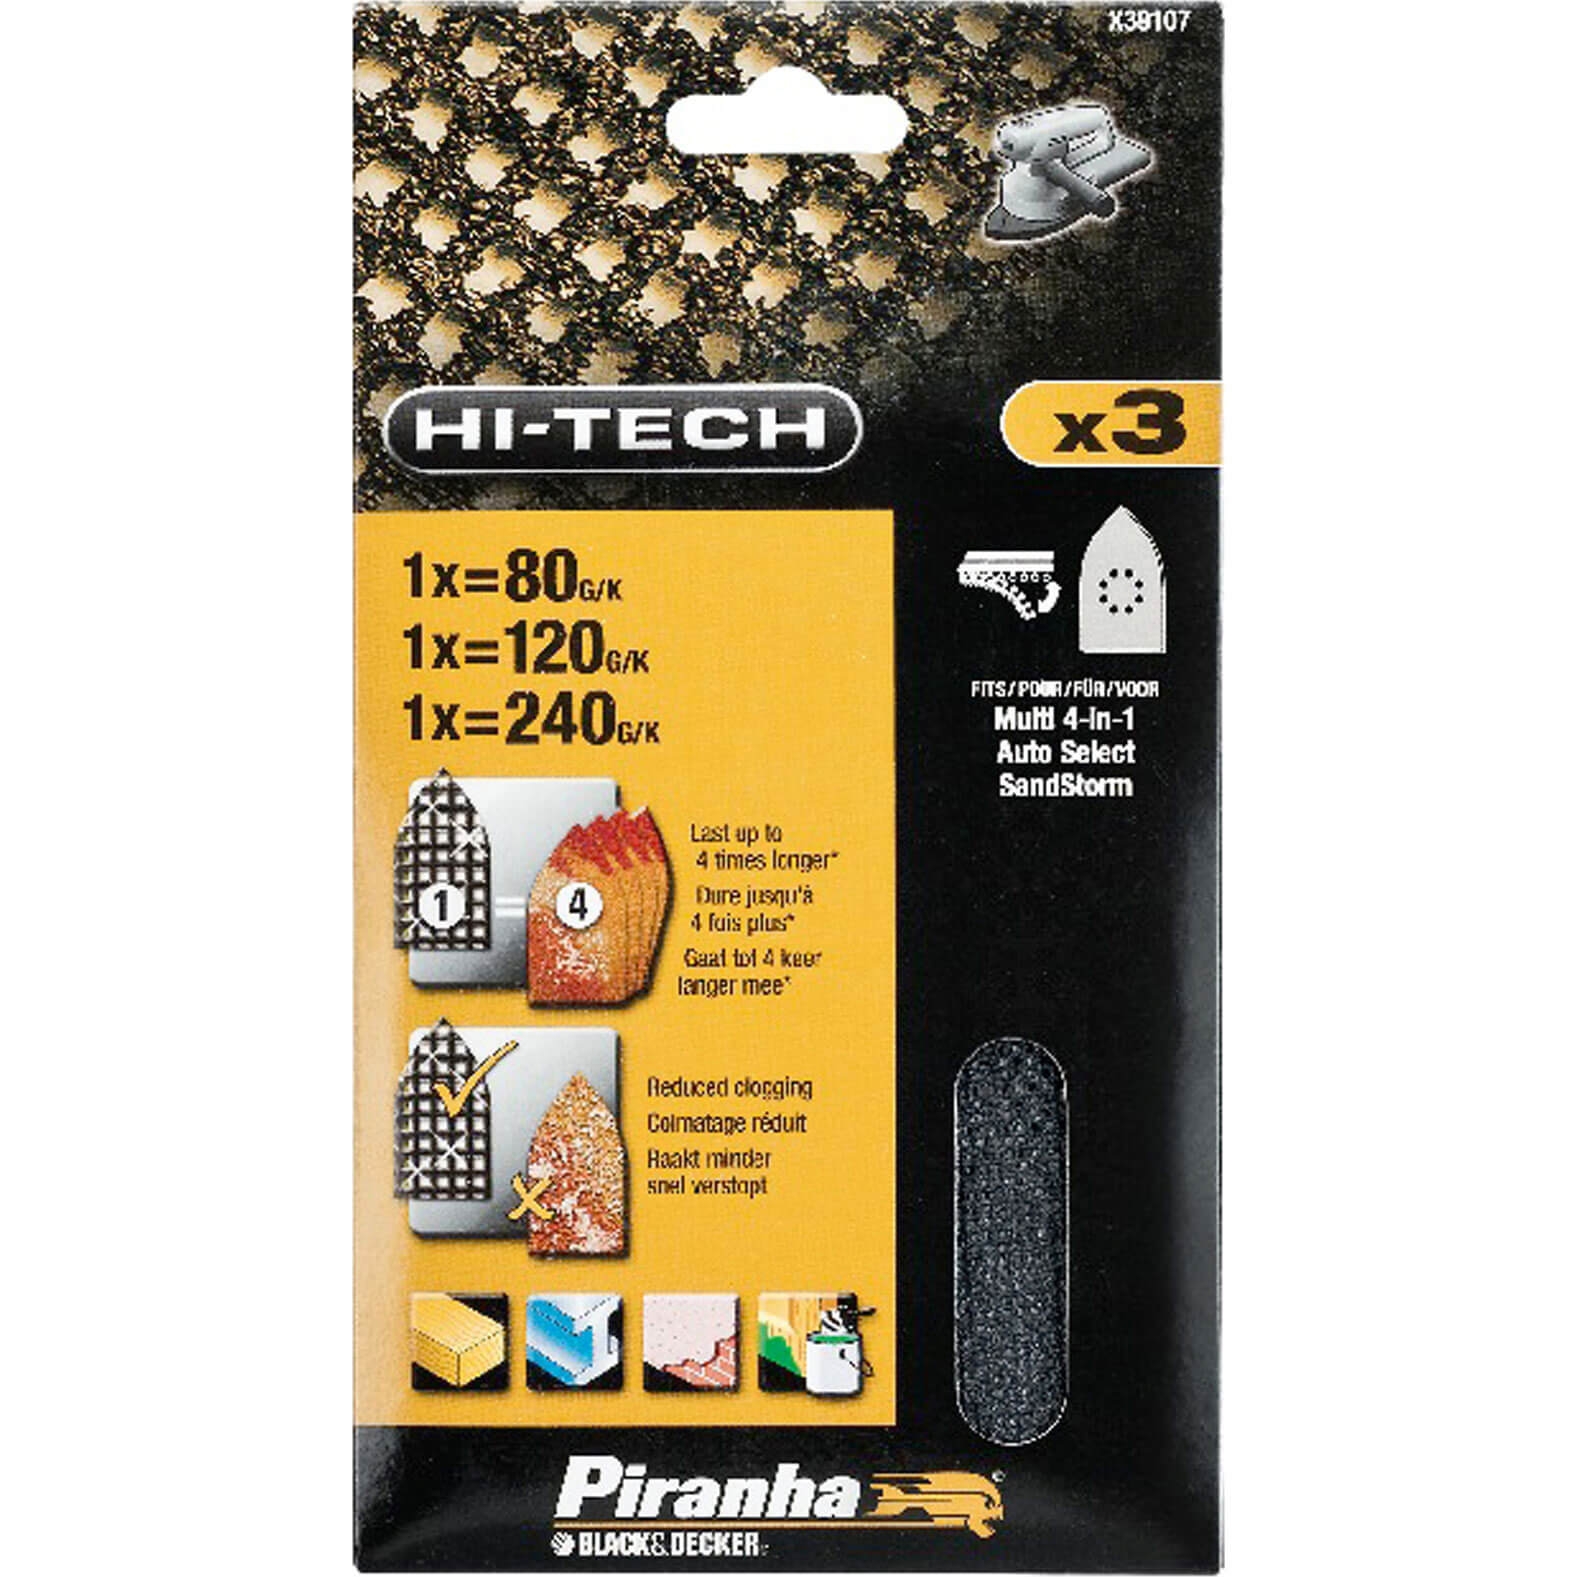 Image of Black and Decker Piranha Hi Tech Quick Fit Multi Sander Delta Sanding Sheets 240g Pack of 3